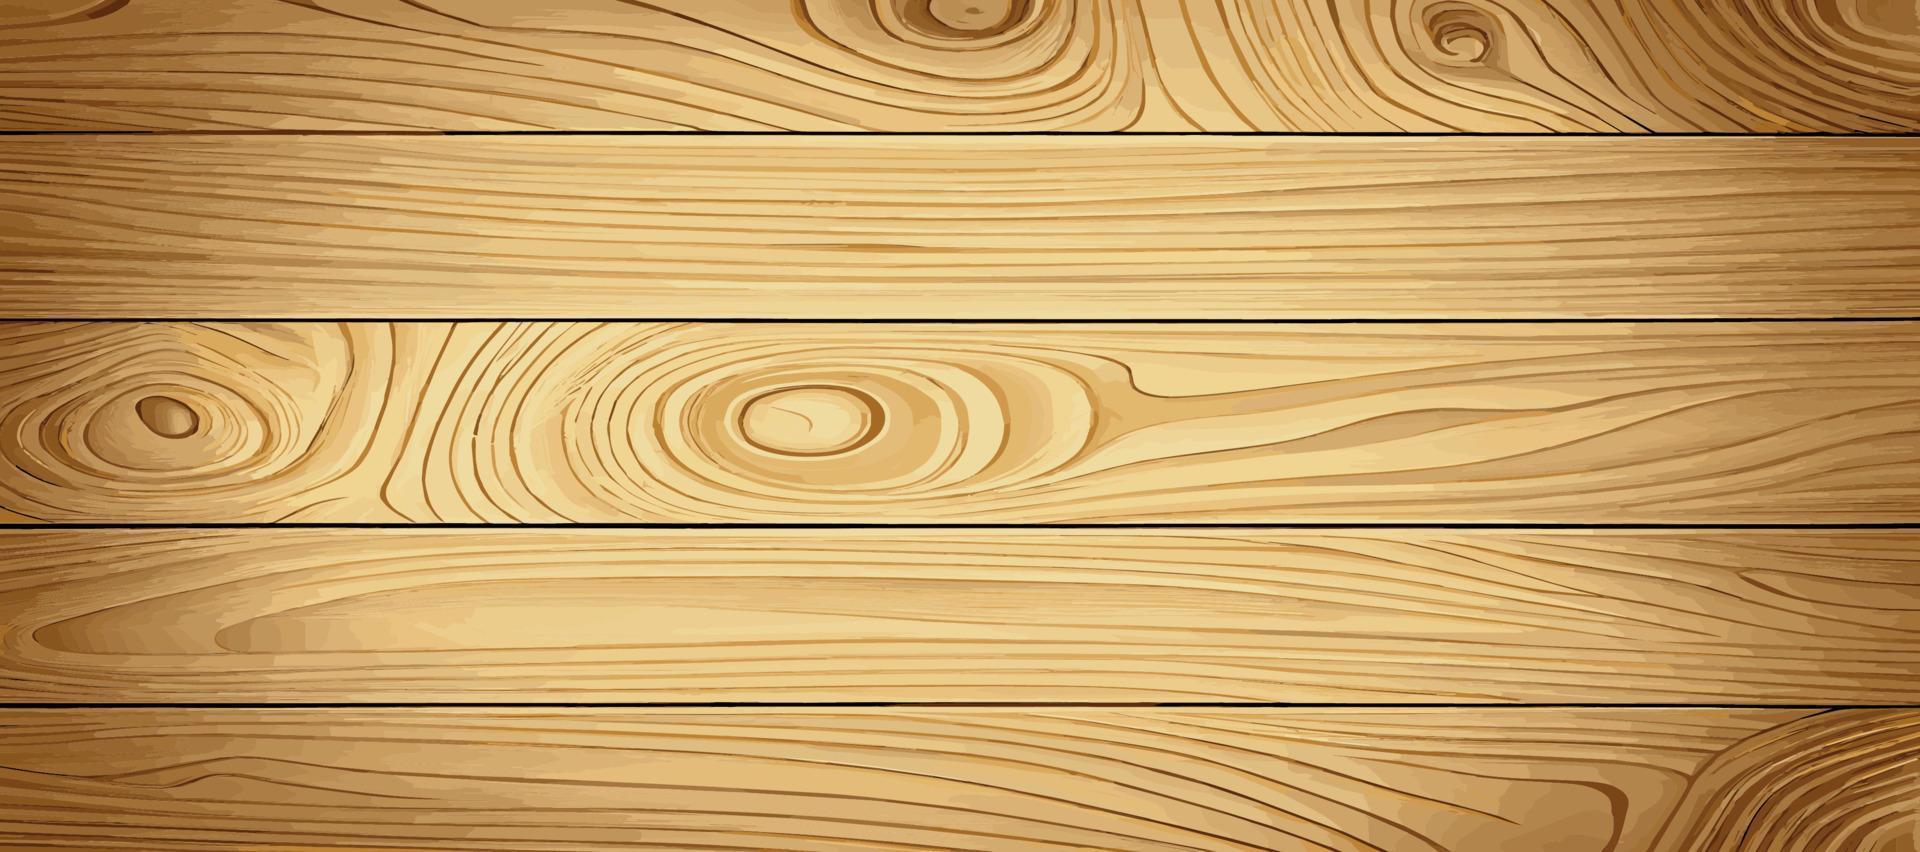 textura panorámica de madera clara con nudos - ilustración vectorial vector